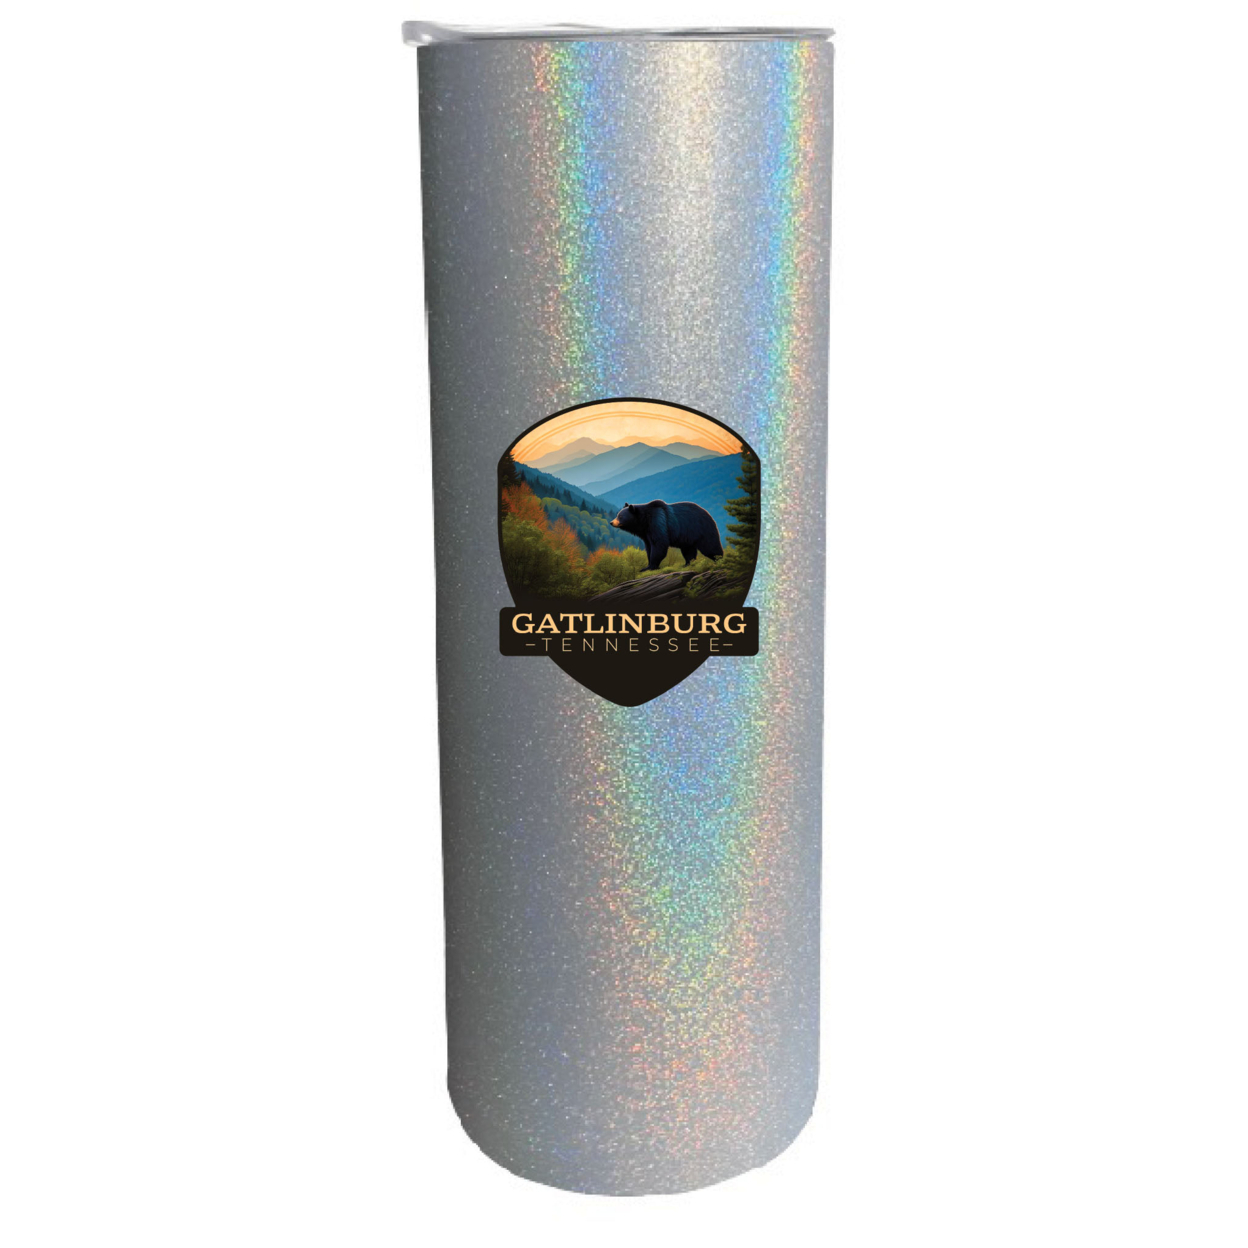 Gatlinburg Tennessee Souvenir 20 Oz Insulated Stainless Steel Skinny Tumbler - Rainbow Glitter Gray, A